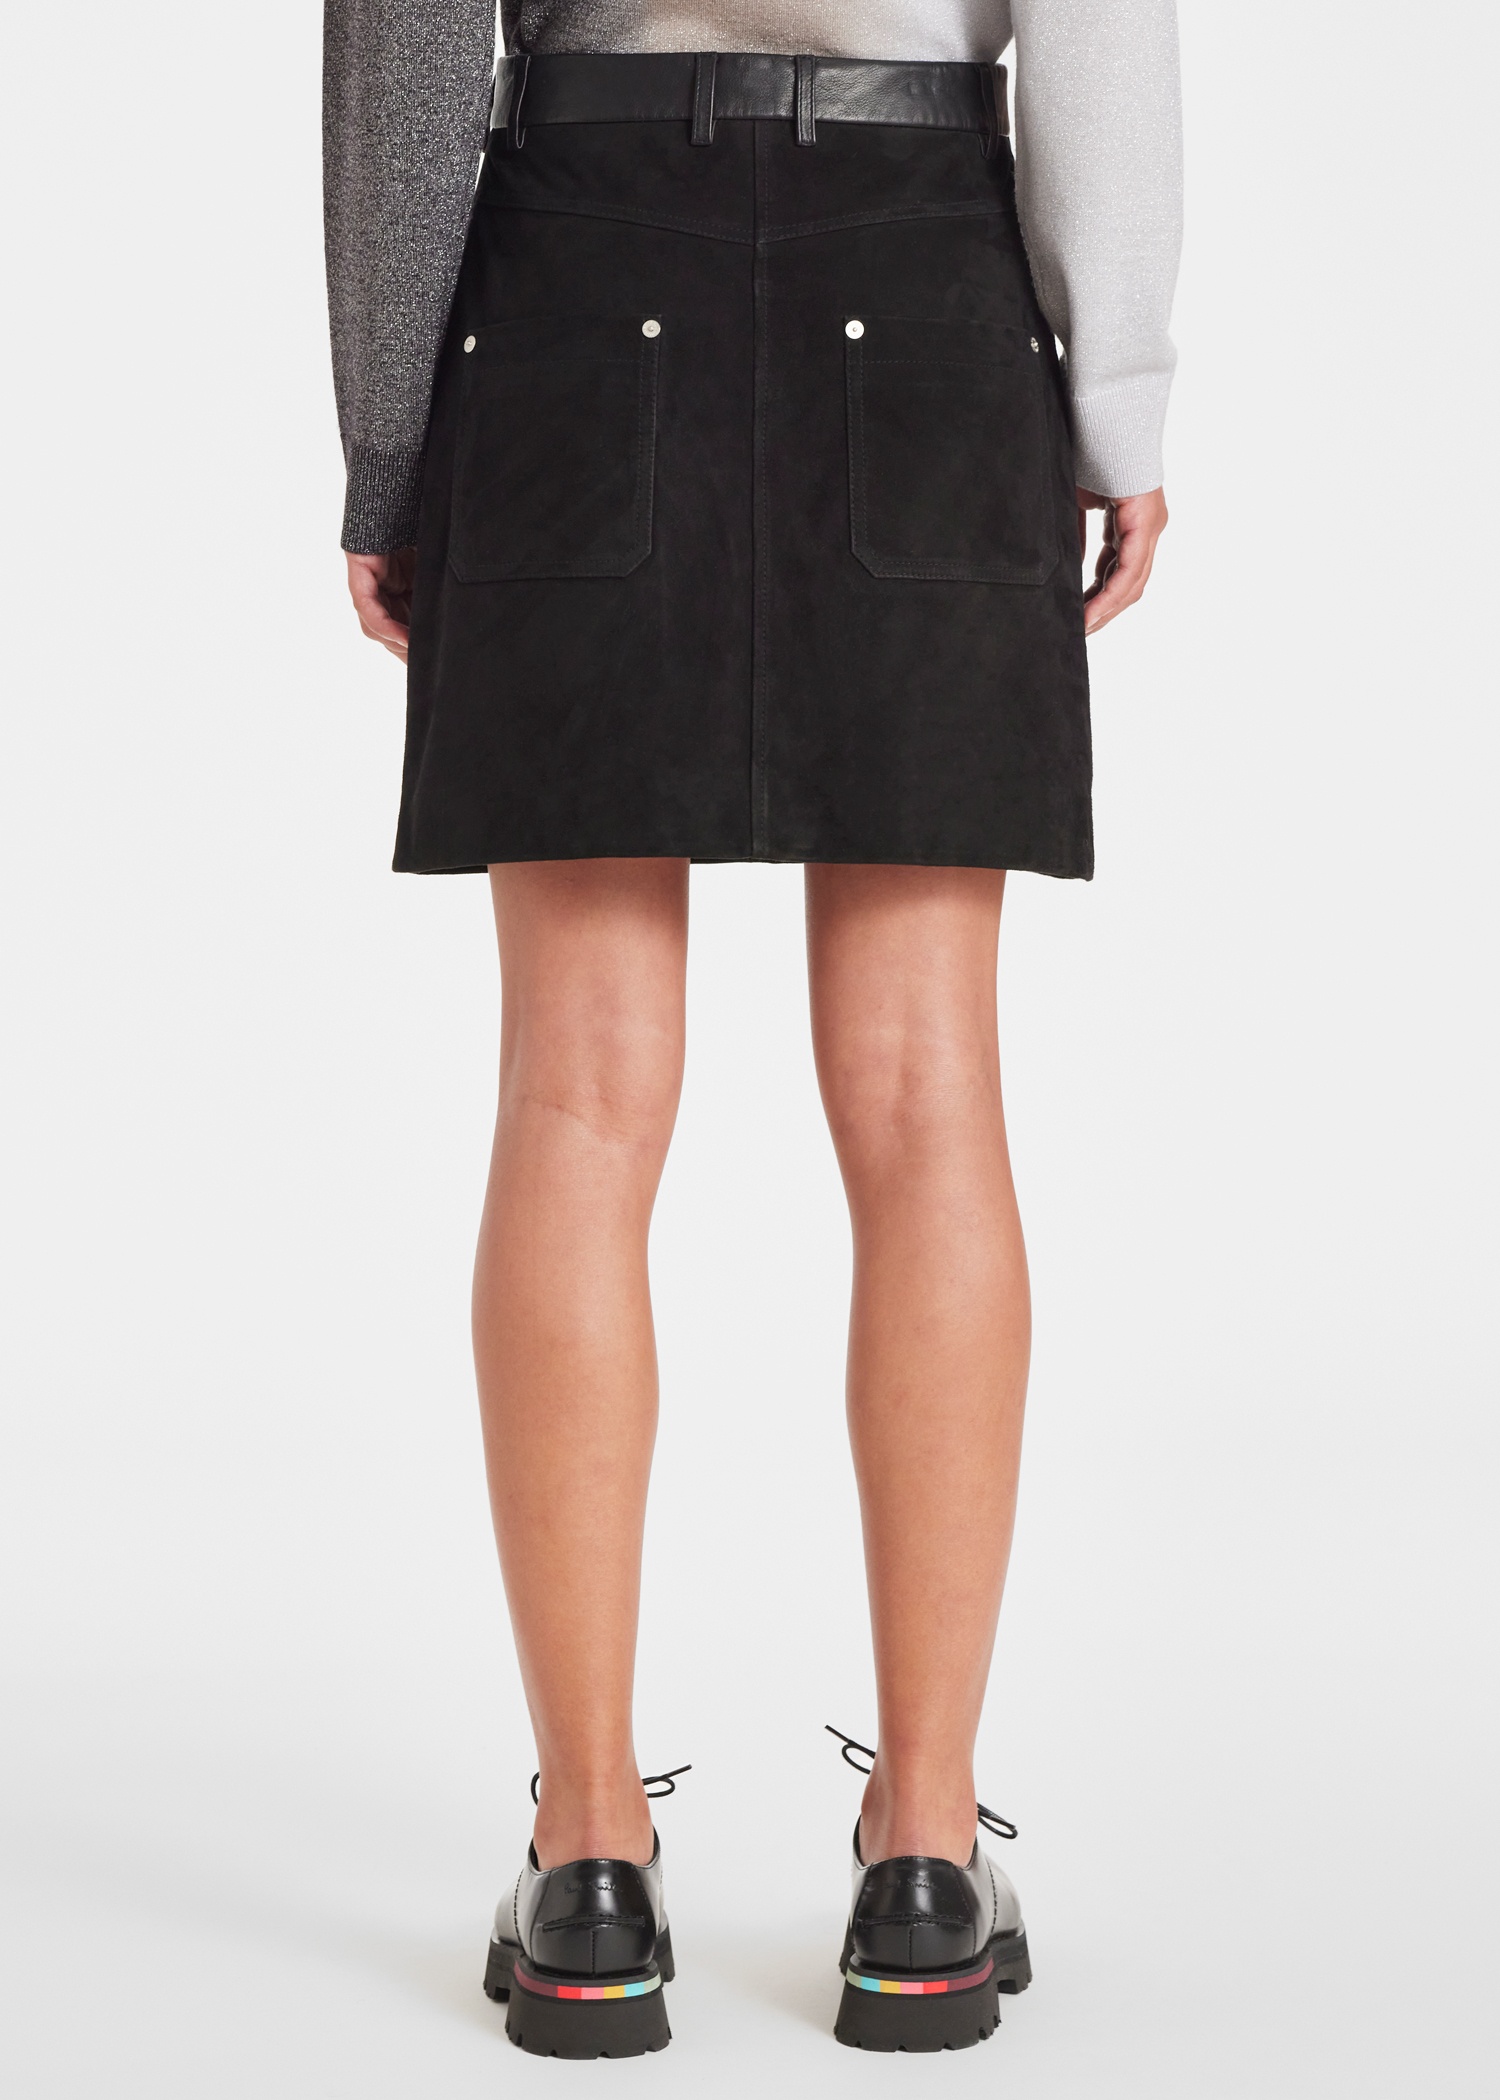 Women's Black Suede Contrasting Short Skirt - 6